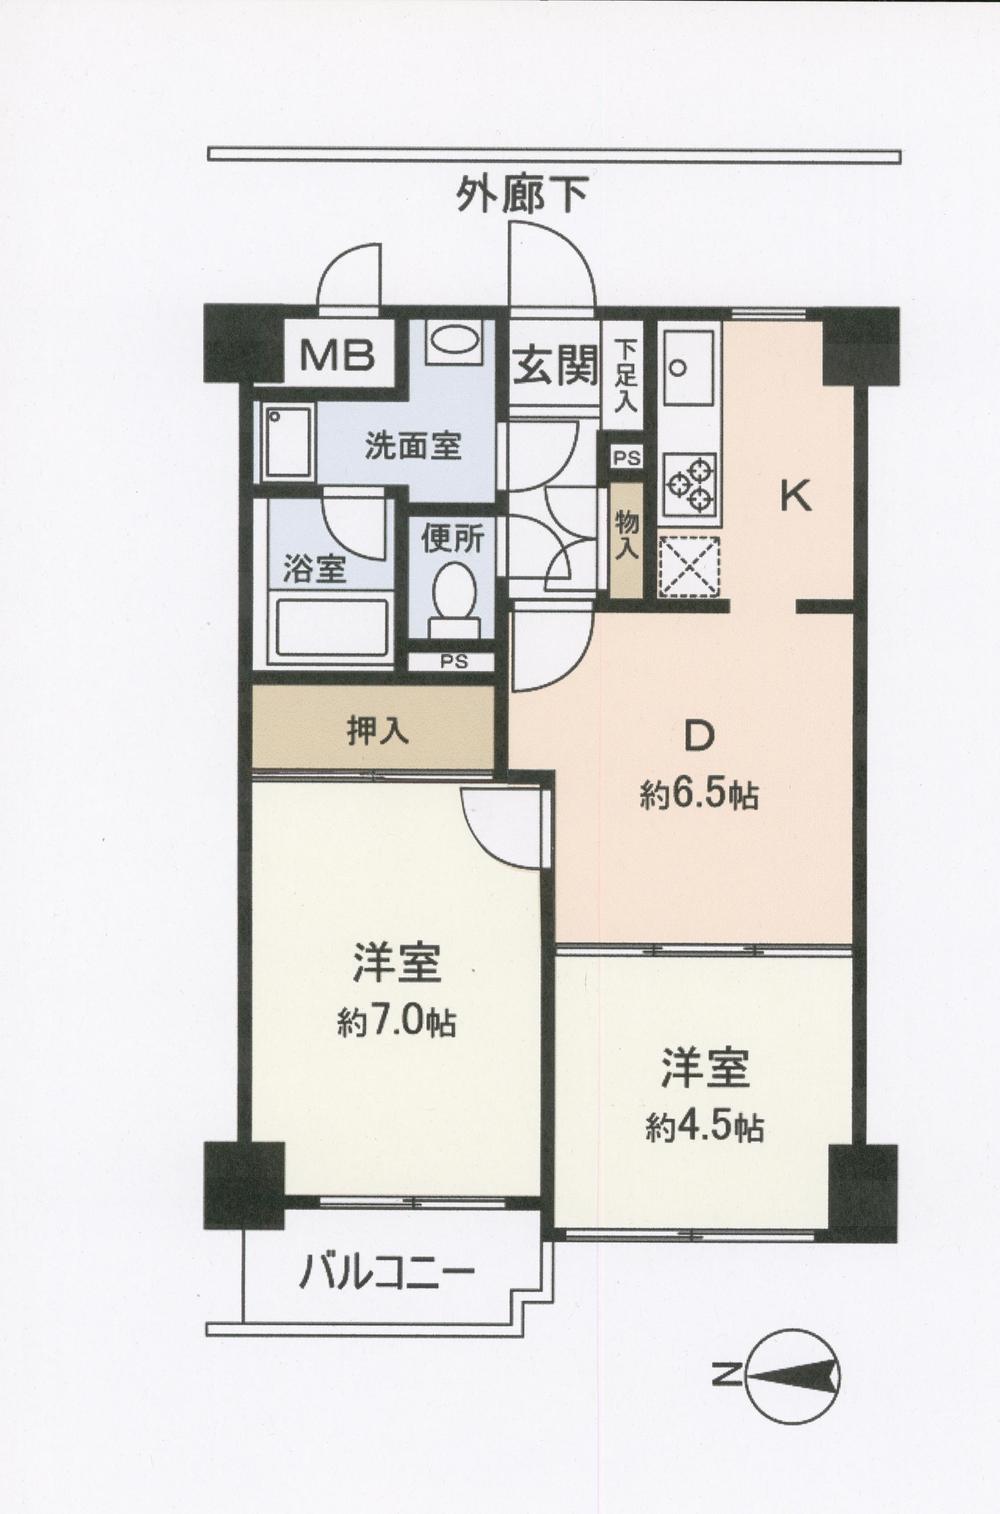 Floor plan. 2DK, Price 12.7 million yen, Footprint 45.7 sq m , Balcony area 3.08 sq m